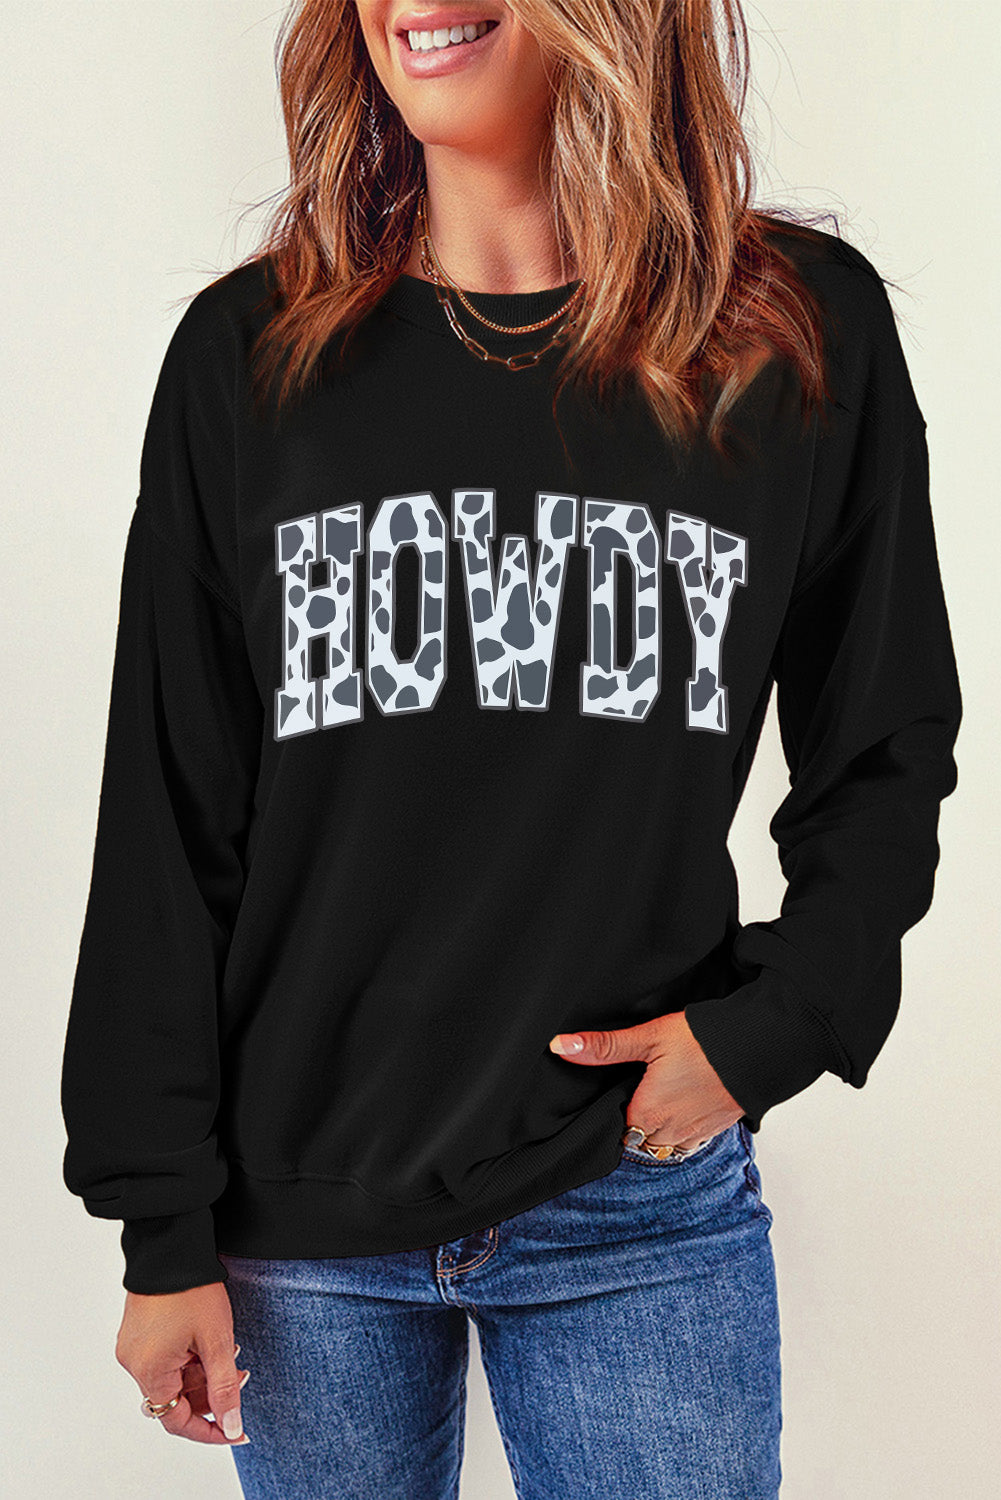 Round Neck Long Sleeve Howdy Graphic Sweatshirt